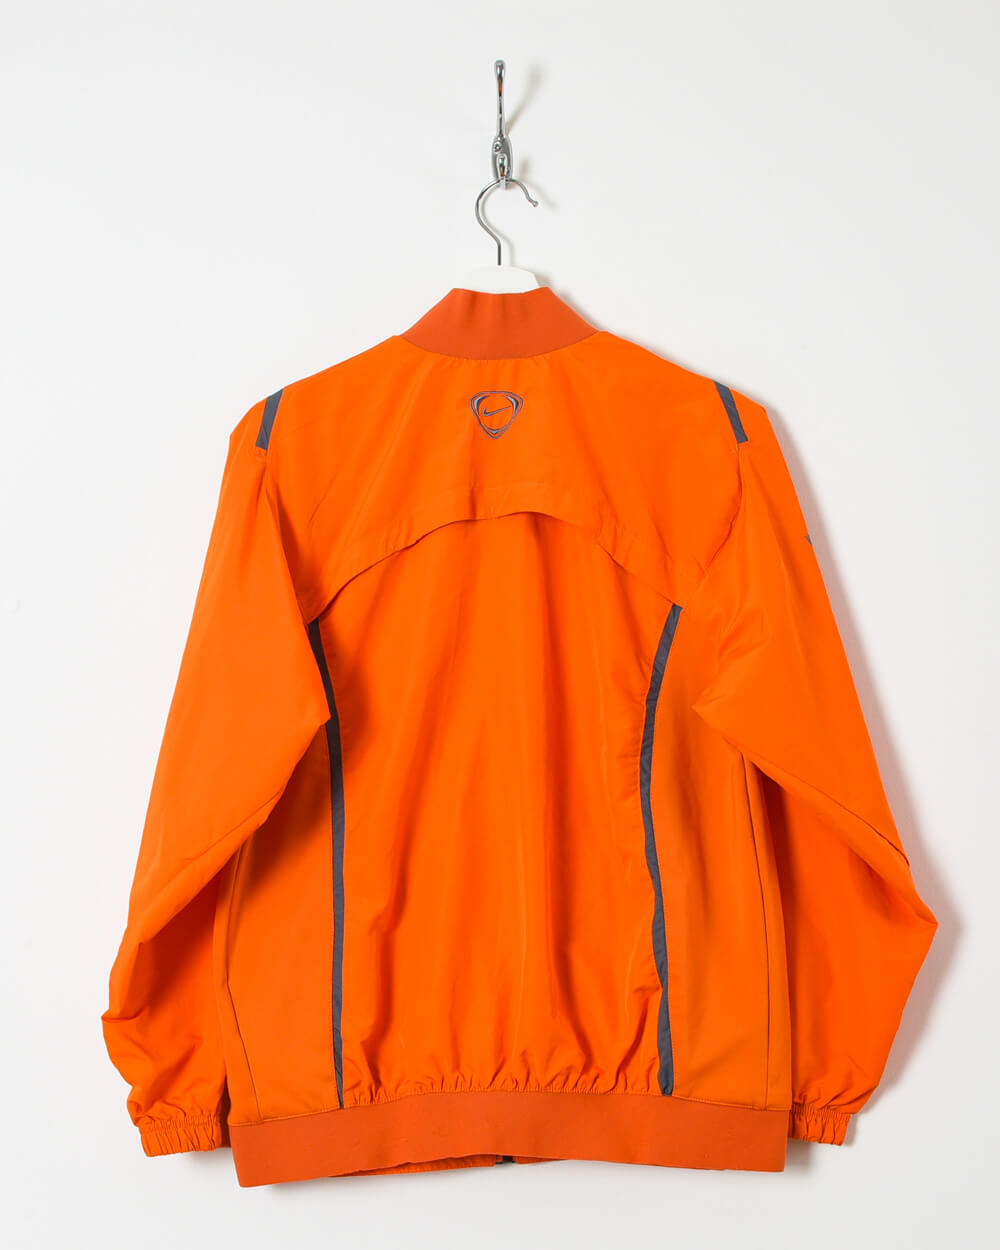 Nike Valencia Jacket - Small - Domno Vintage 90s, 80s, 00s Retro and Vintage Clothing 